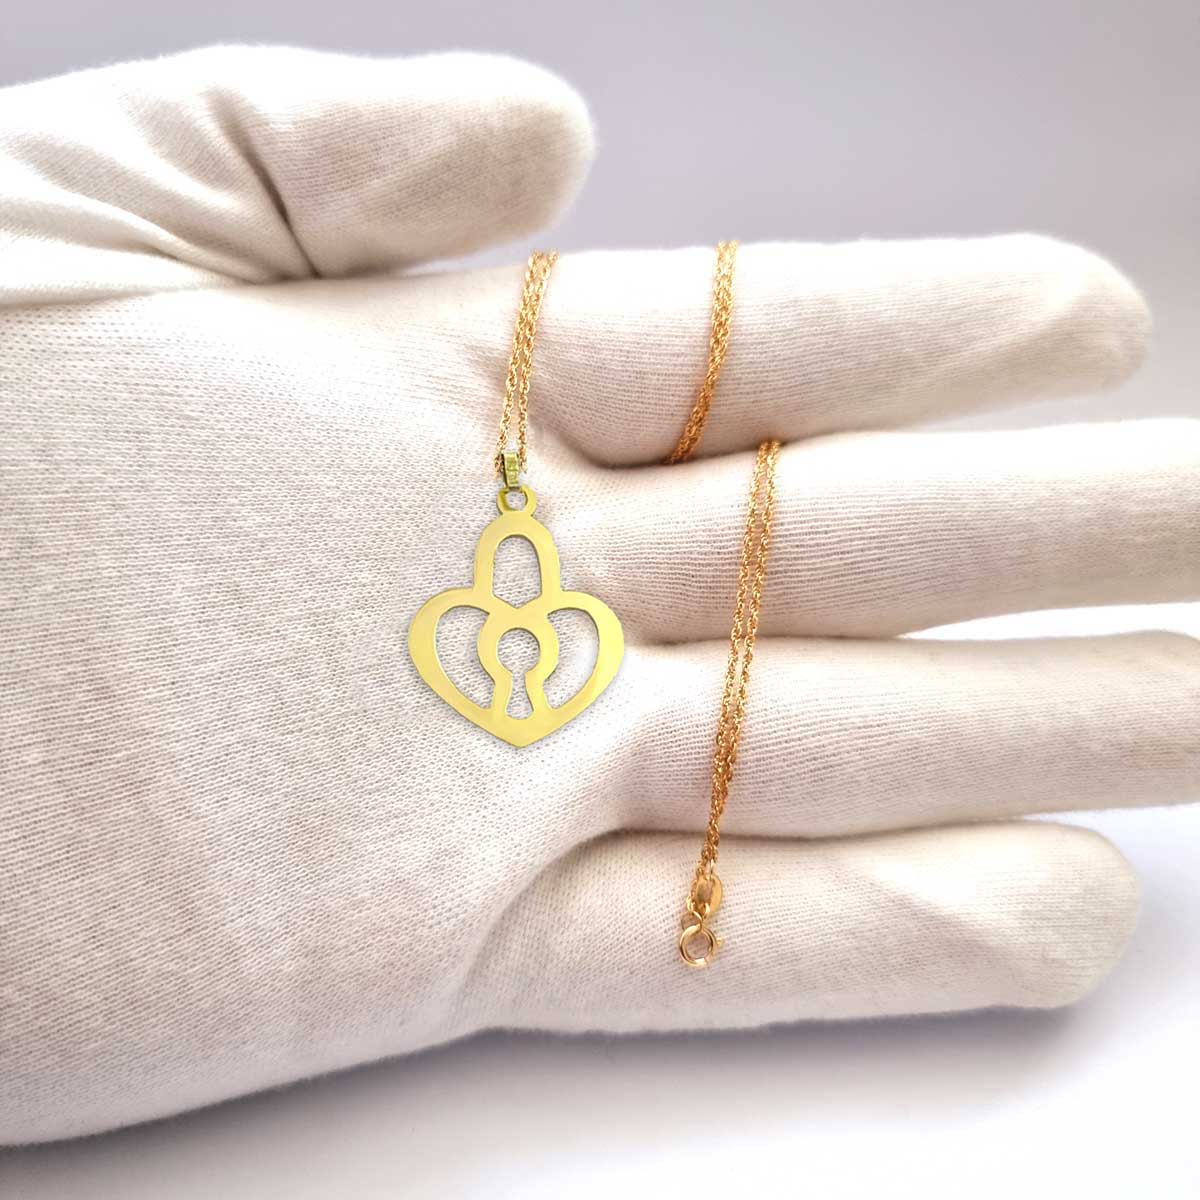 18K Pure Gold Heart Lock Design Pendant Necklace